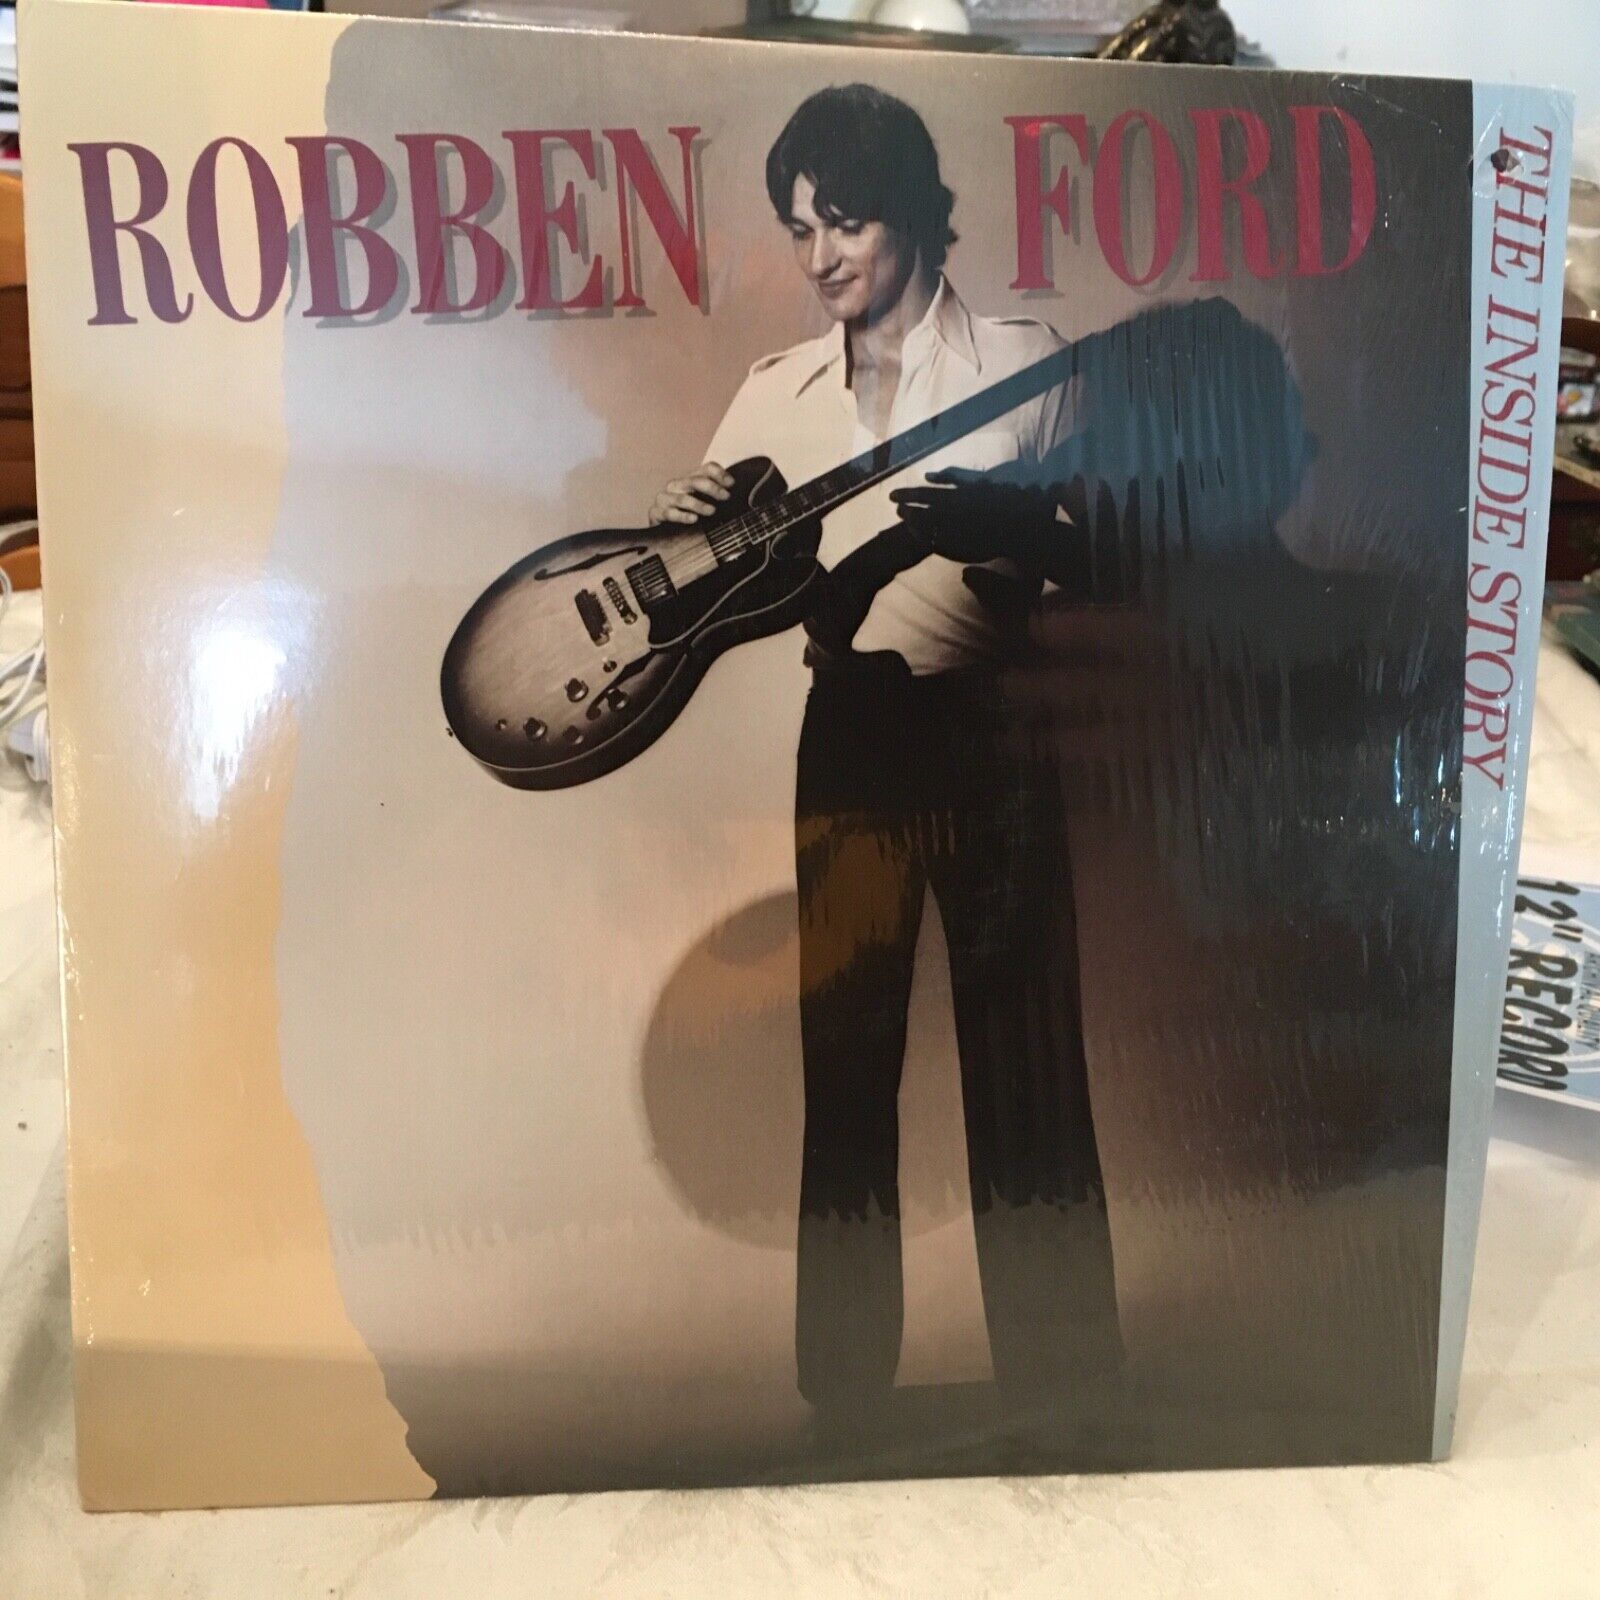 ROBBEN FORD LP THE INSIDE STORY 1979 ELEKTRA 6E 169. EX/NM Shrink